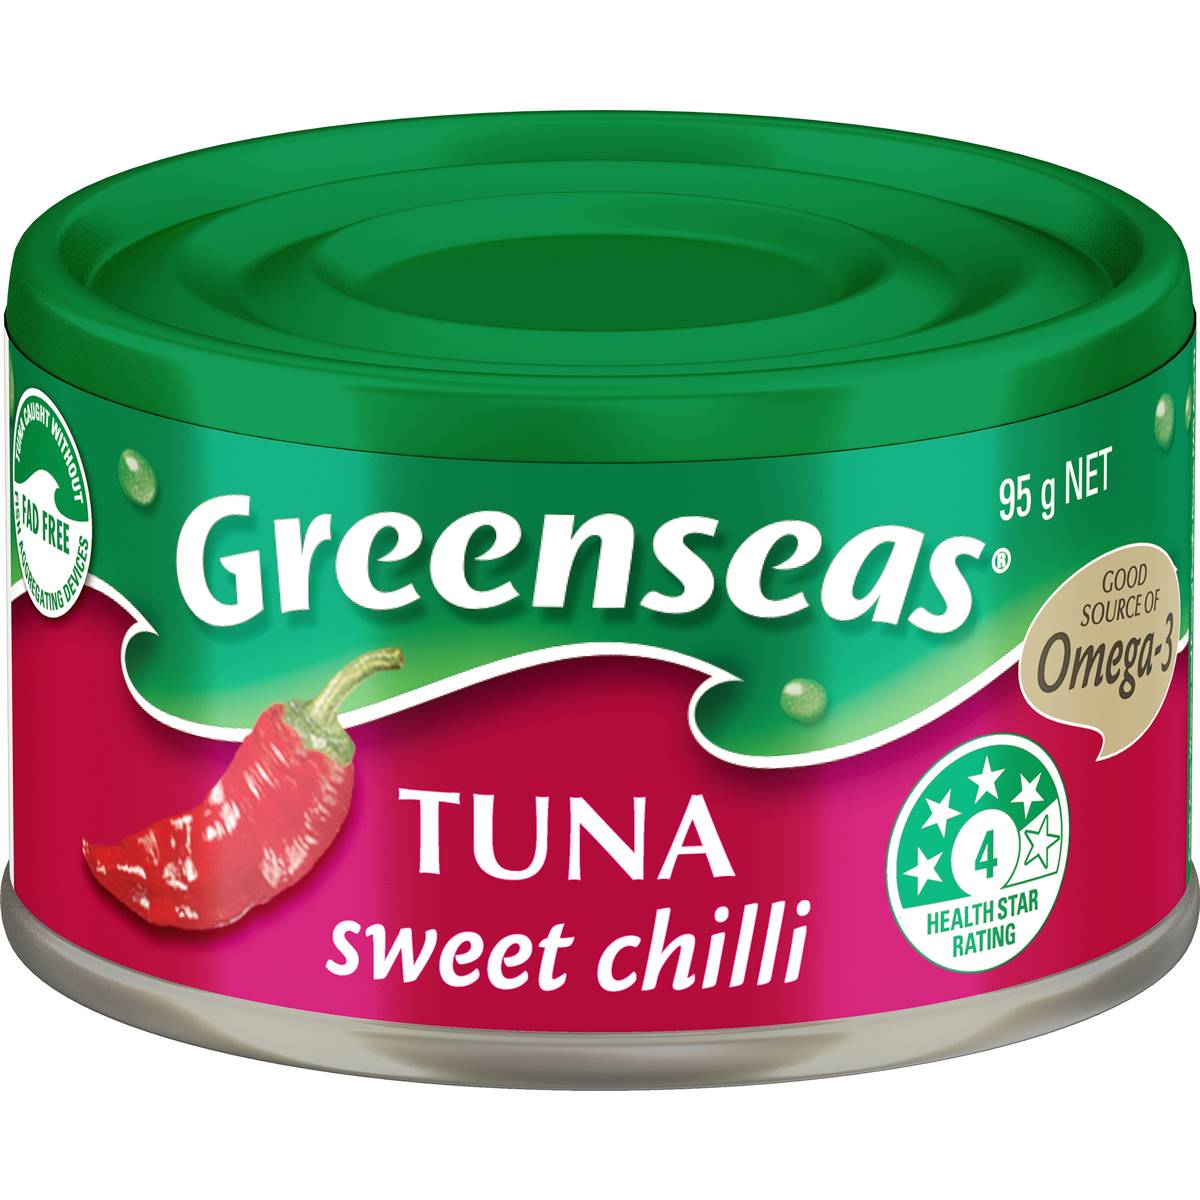 Calories in Greenseas Tuna Sweet Chilli Sweet Chilli